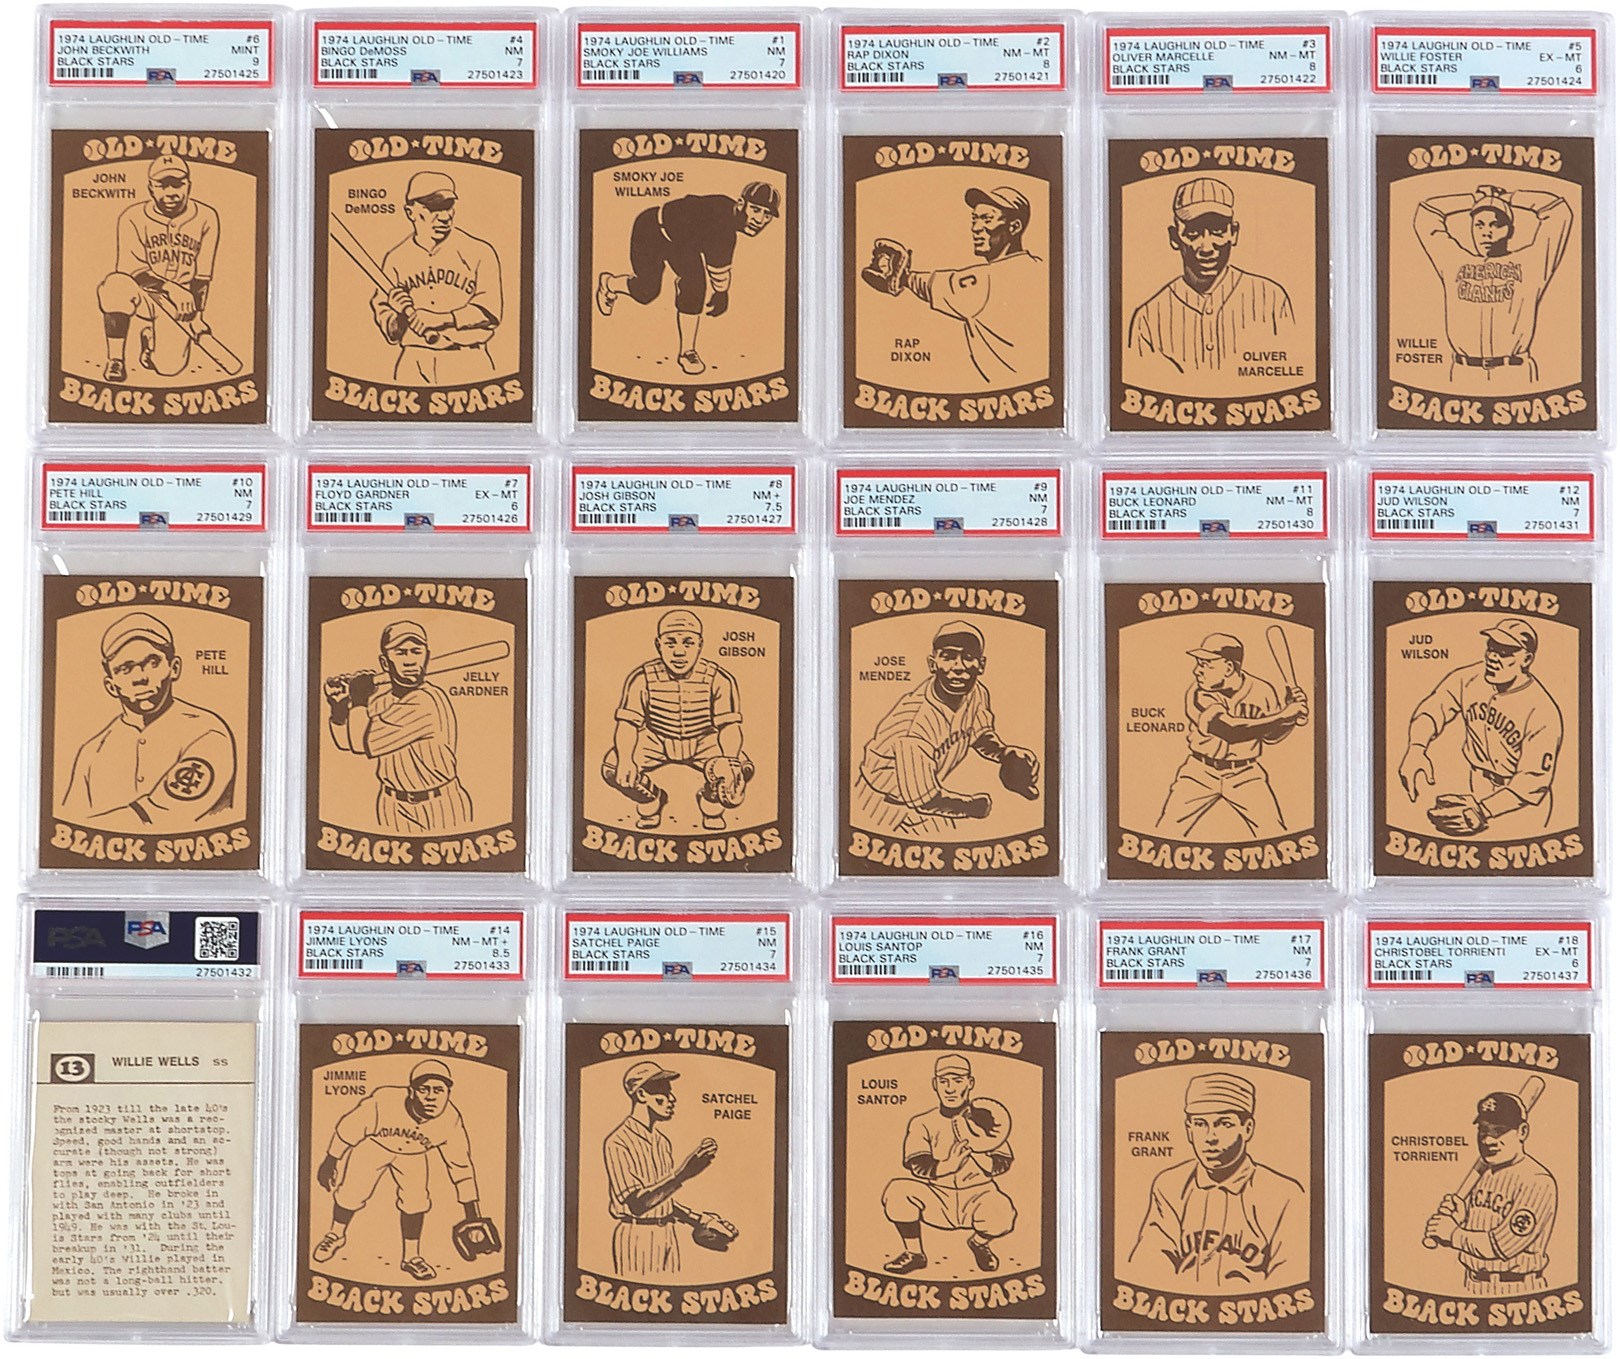 Baseball and Trading Cards - 1974 Laughlin Old Time Black Stars Complete PSA Graded Set (36) - #4 Finest on the Set Registry